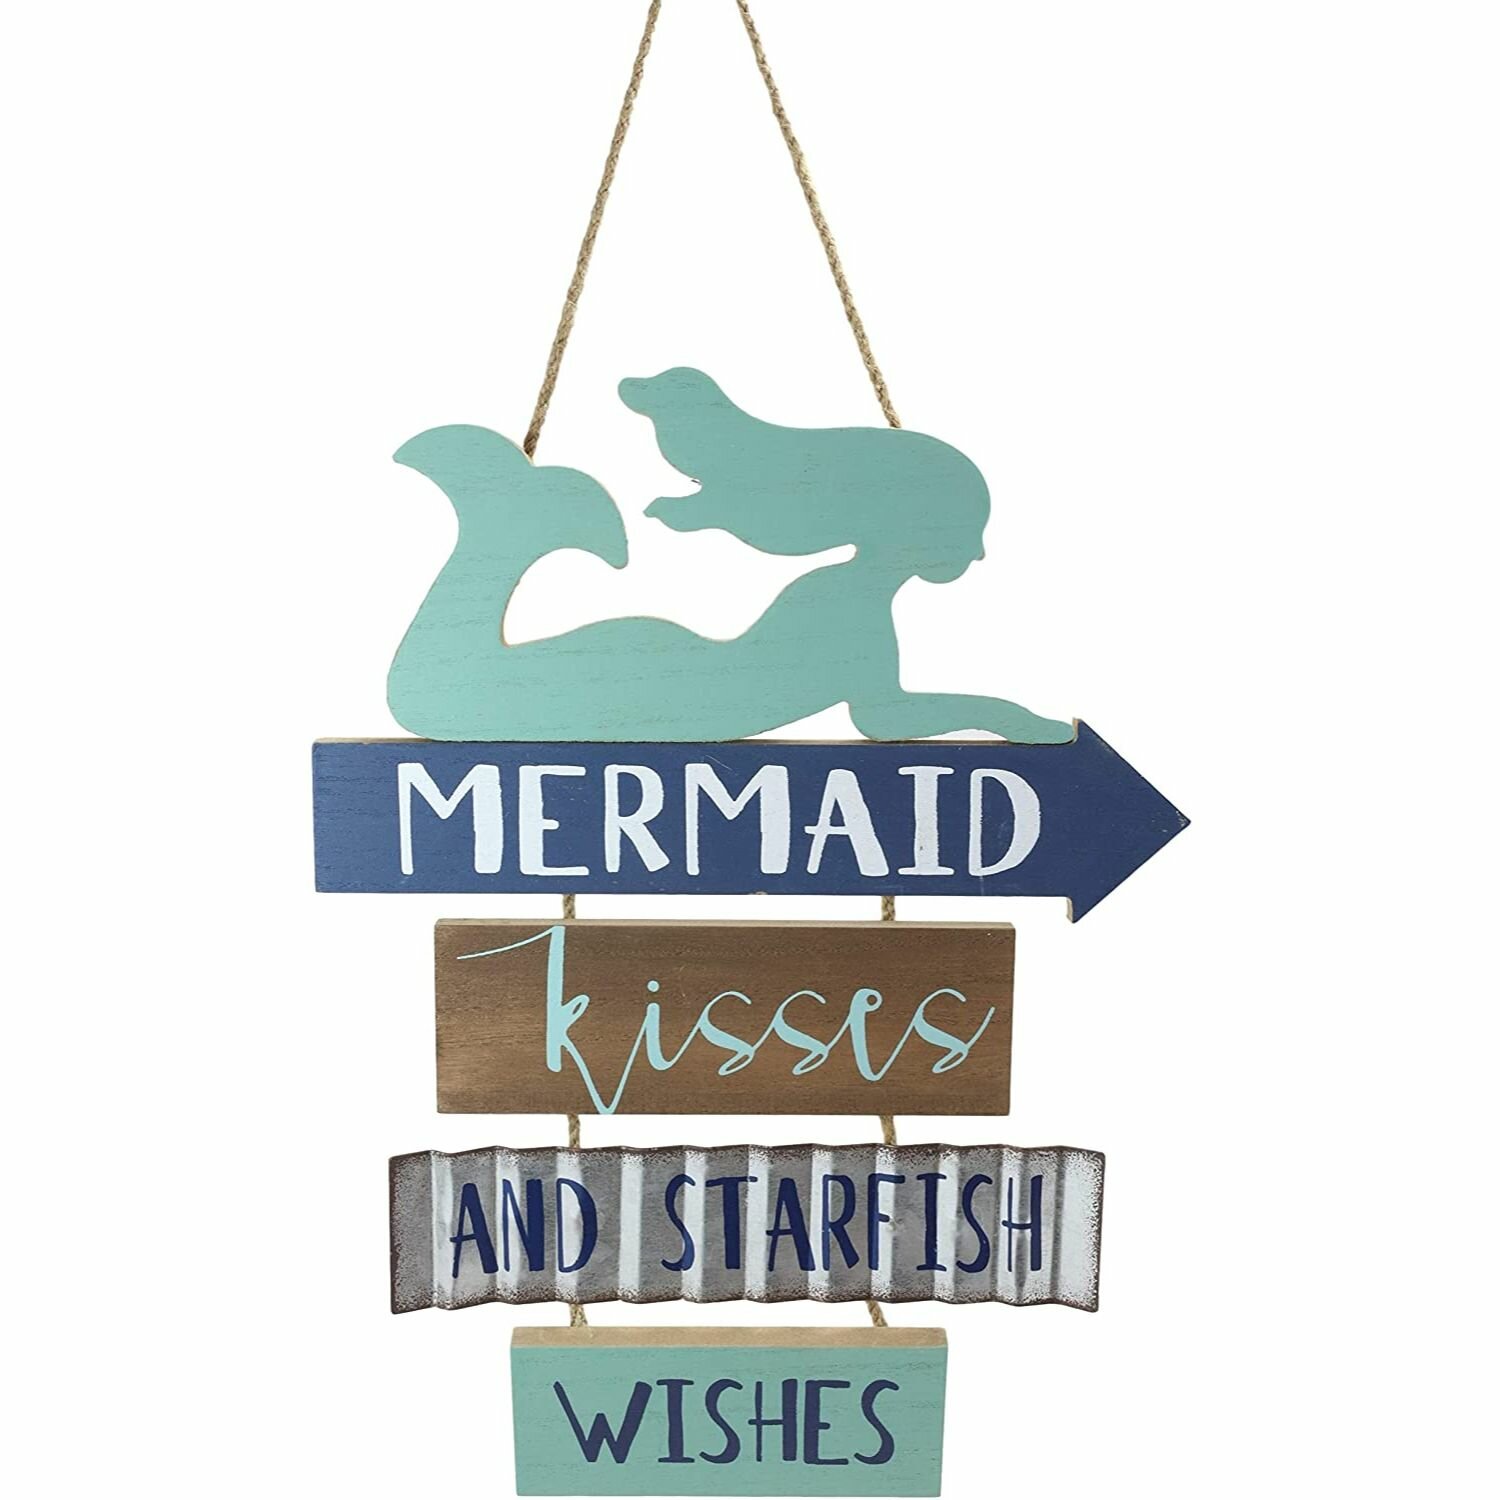 Mermaid Kisses Starfish Wishes 12" x 12" Metal Sign Coastal Nautical Home Decor 